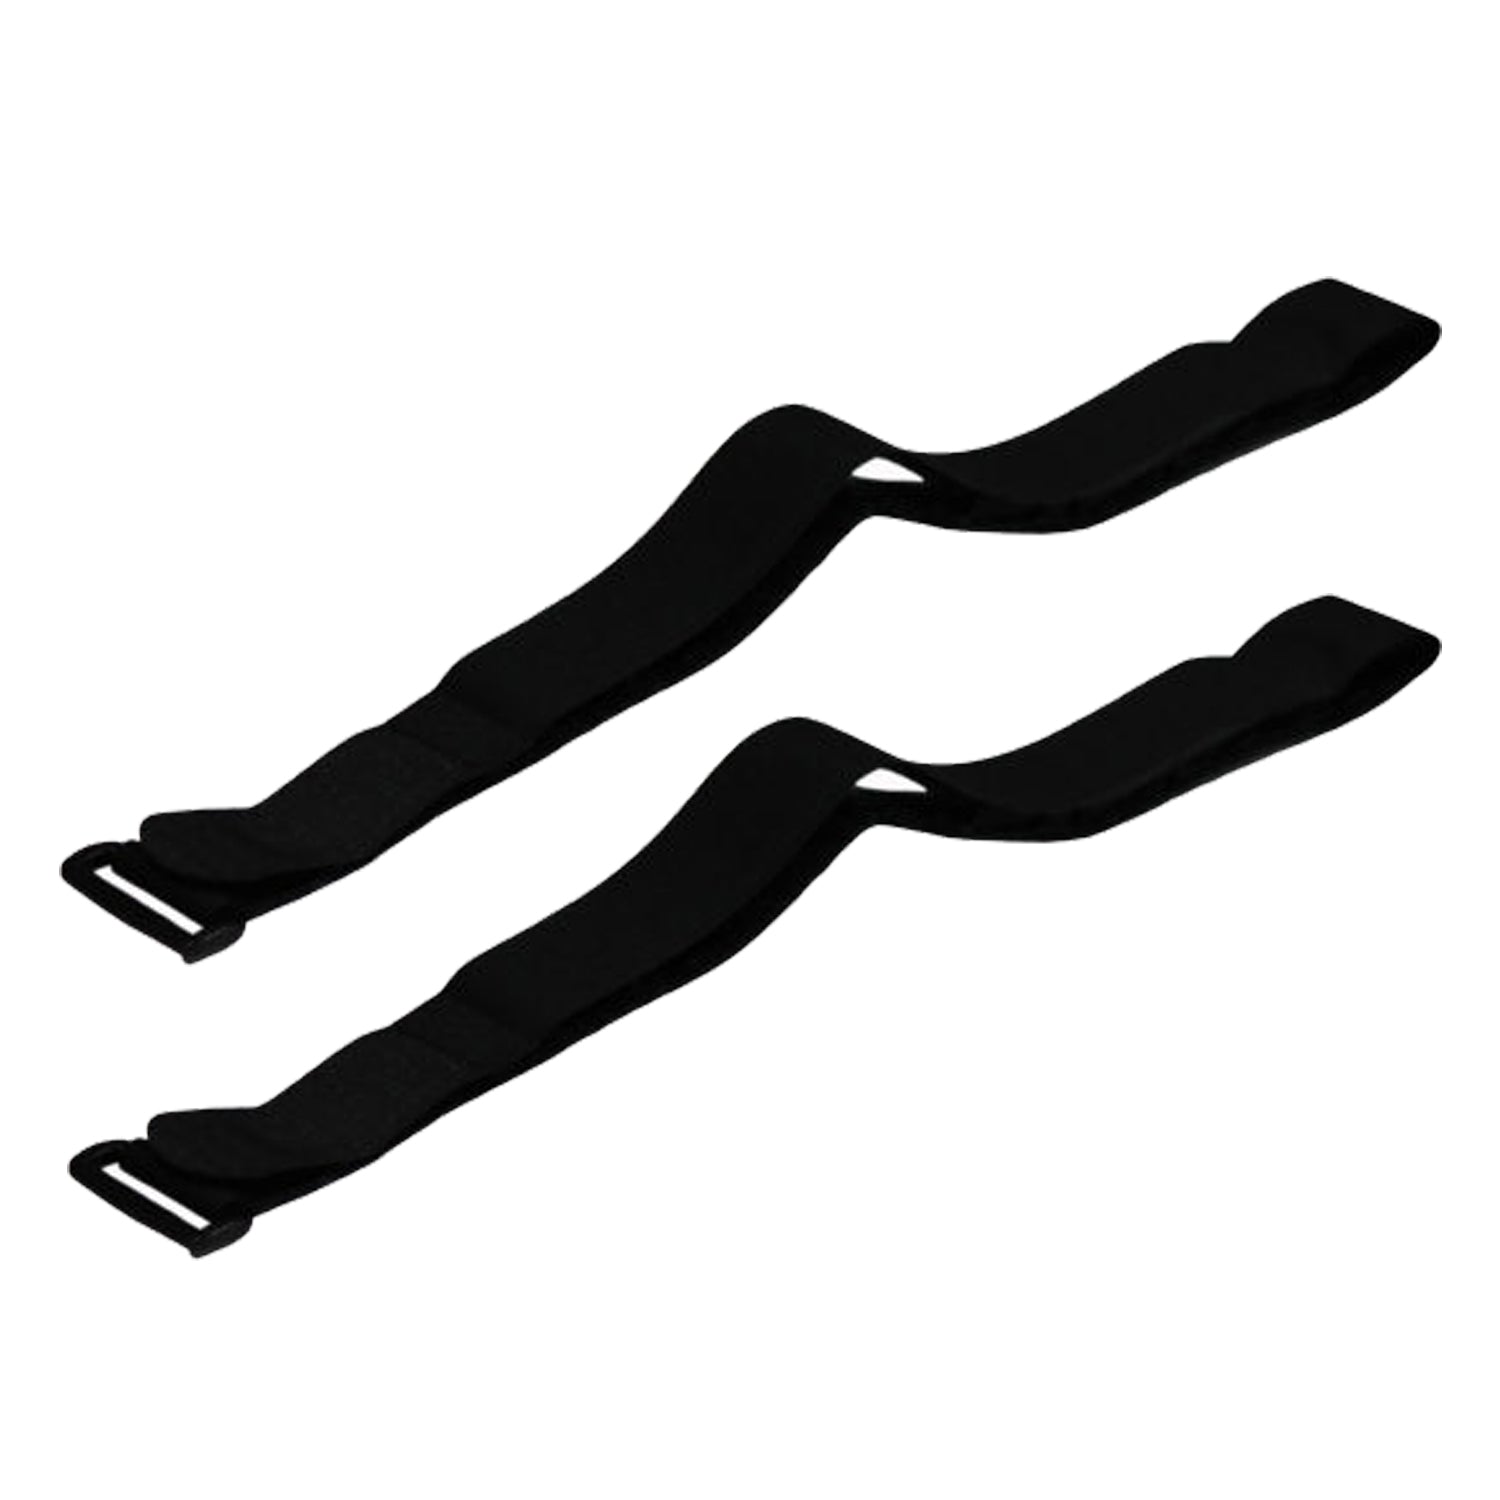 hover cart straps, hover cart attachment straps, straps for hoverboard attachment, velcro straps